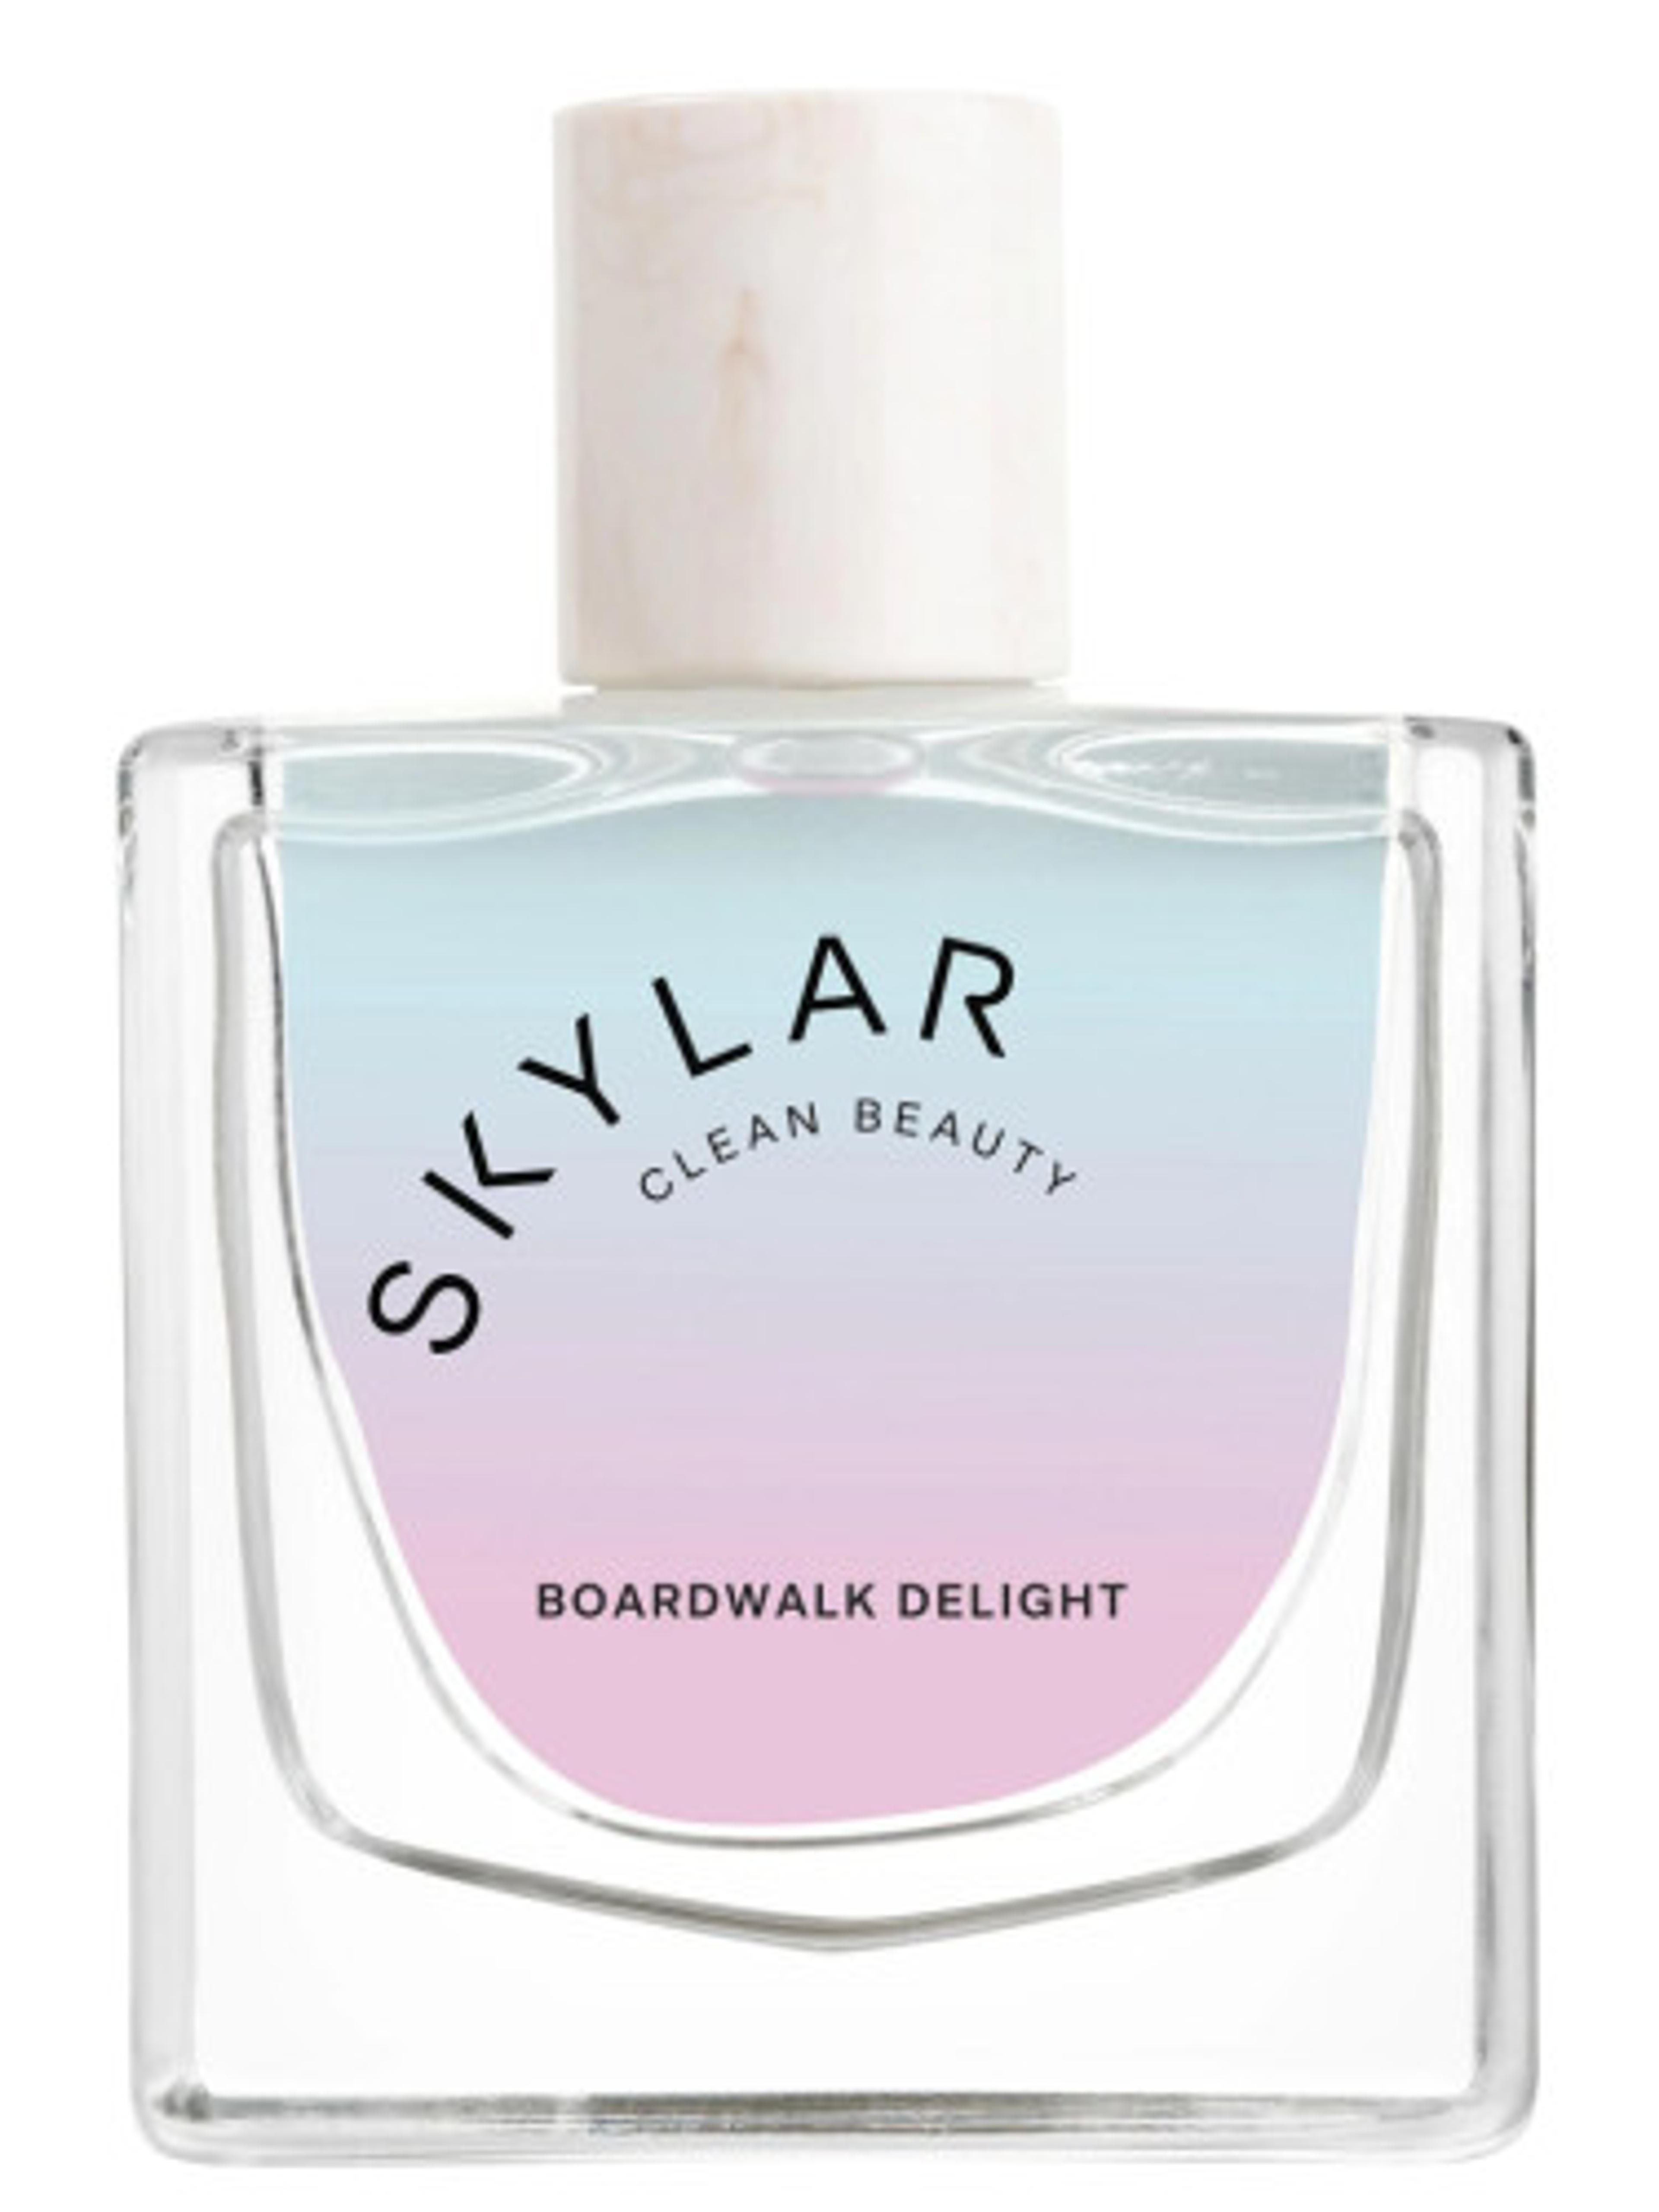 Boardwalk Delight Skylar perfume - a new fragrance for women 2022